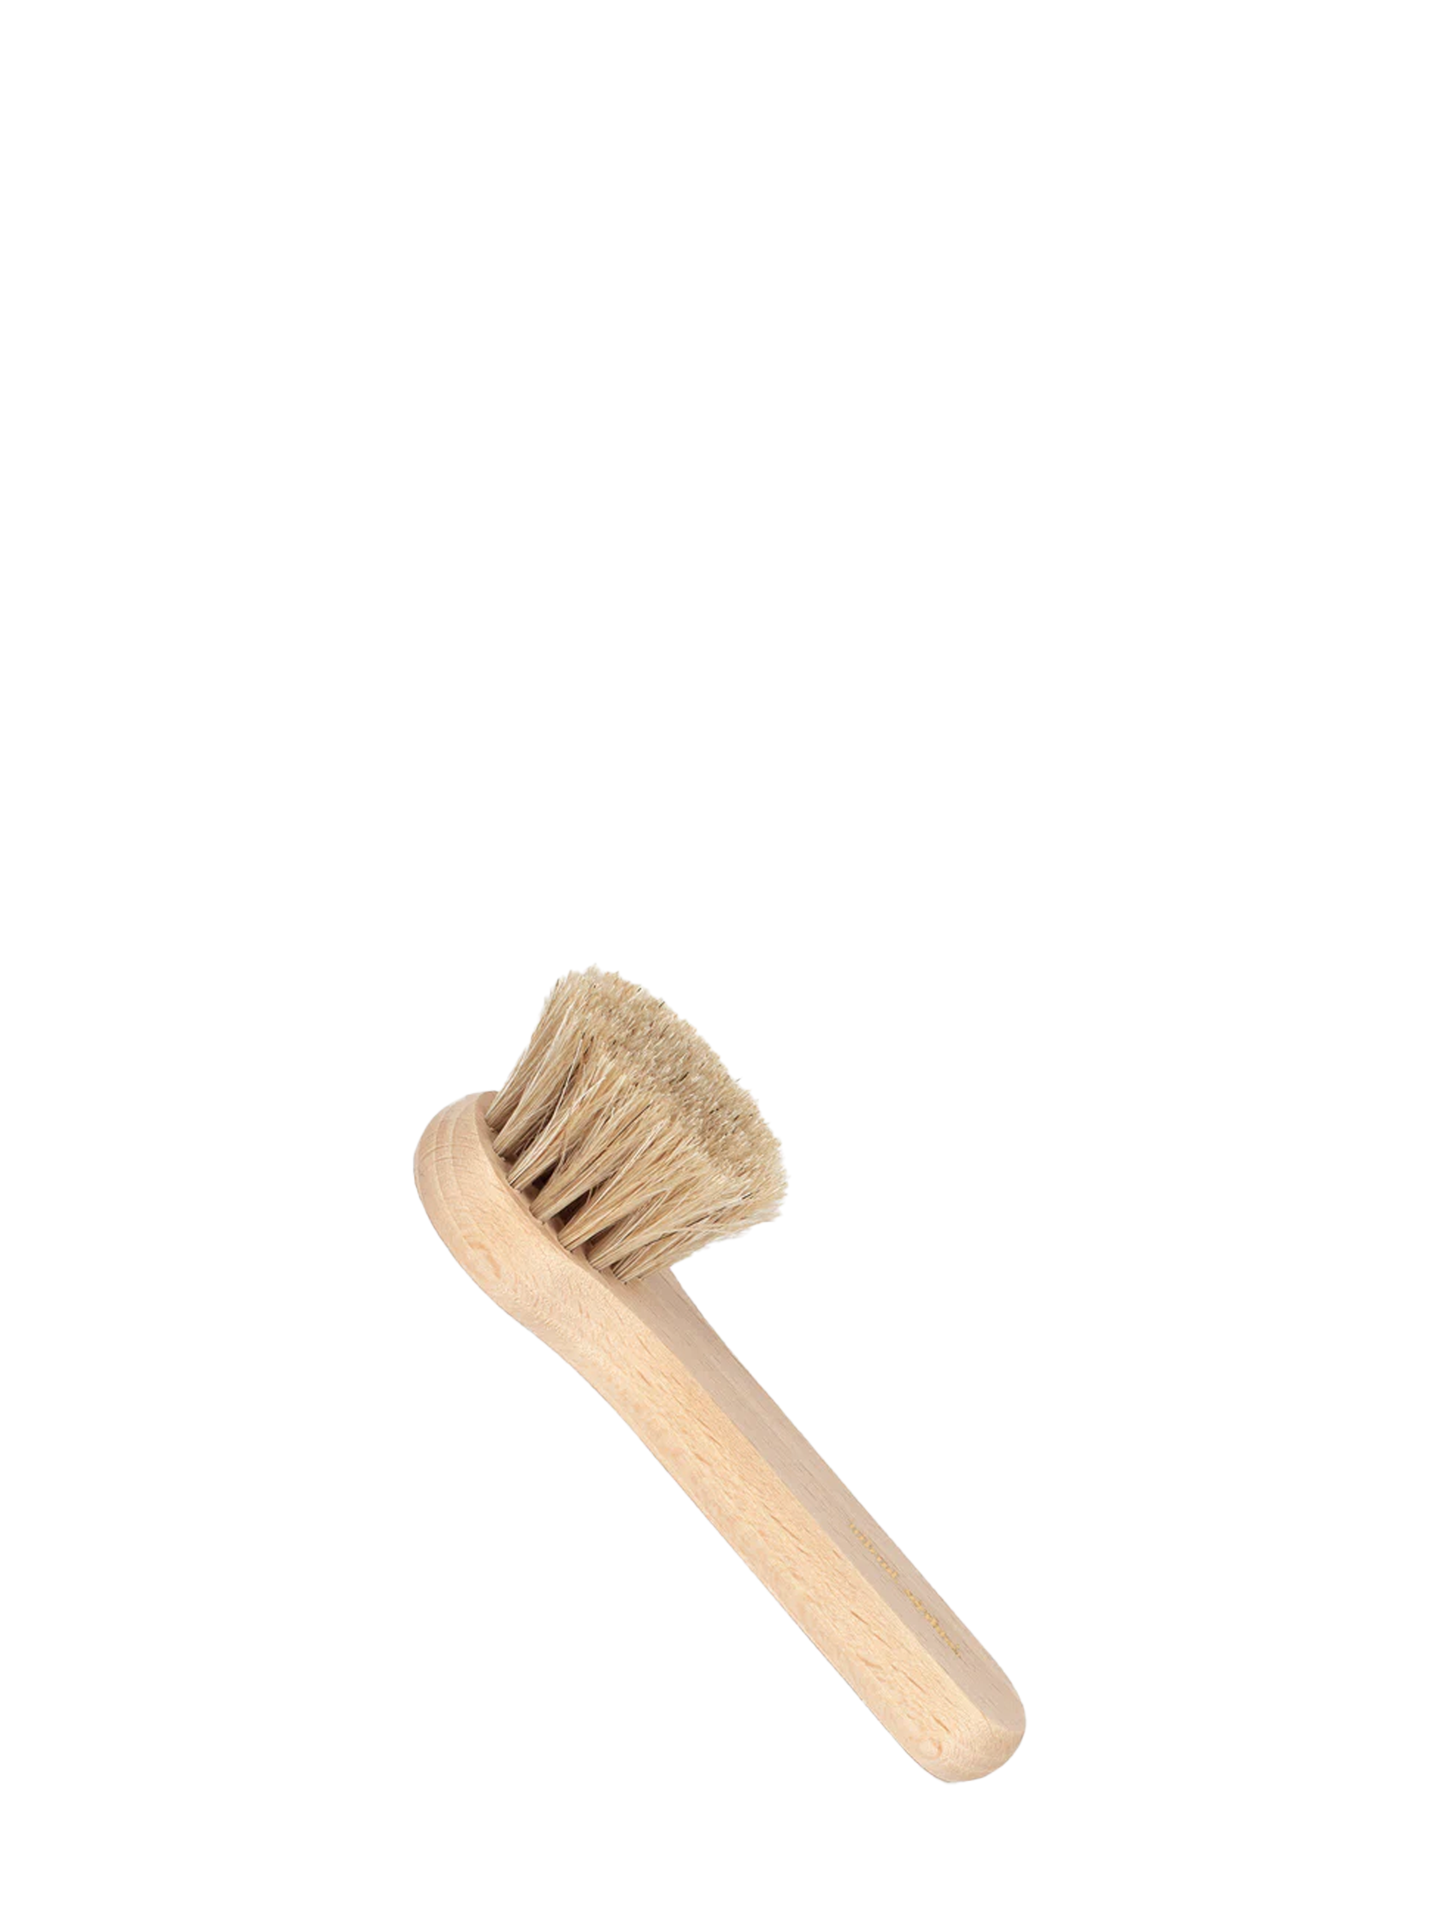 Scrub face cleansing brush, light wood